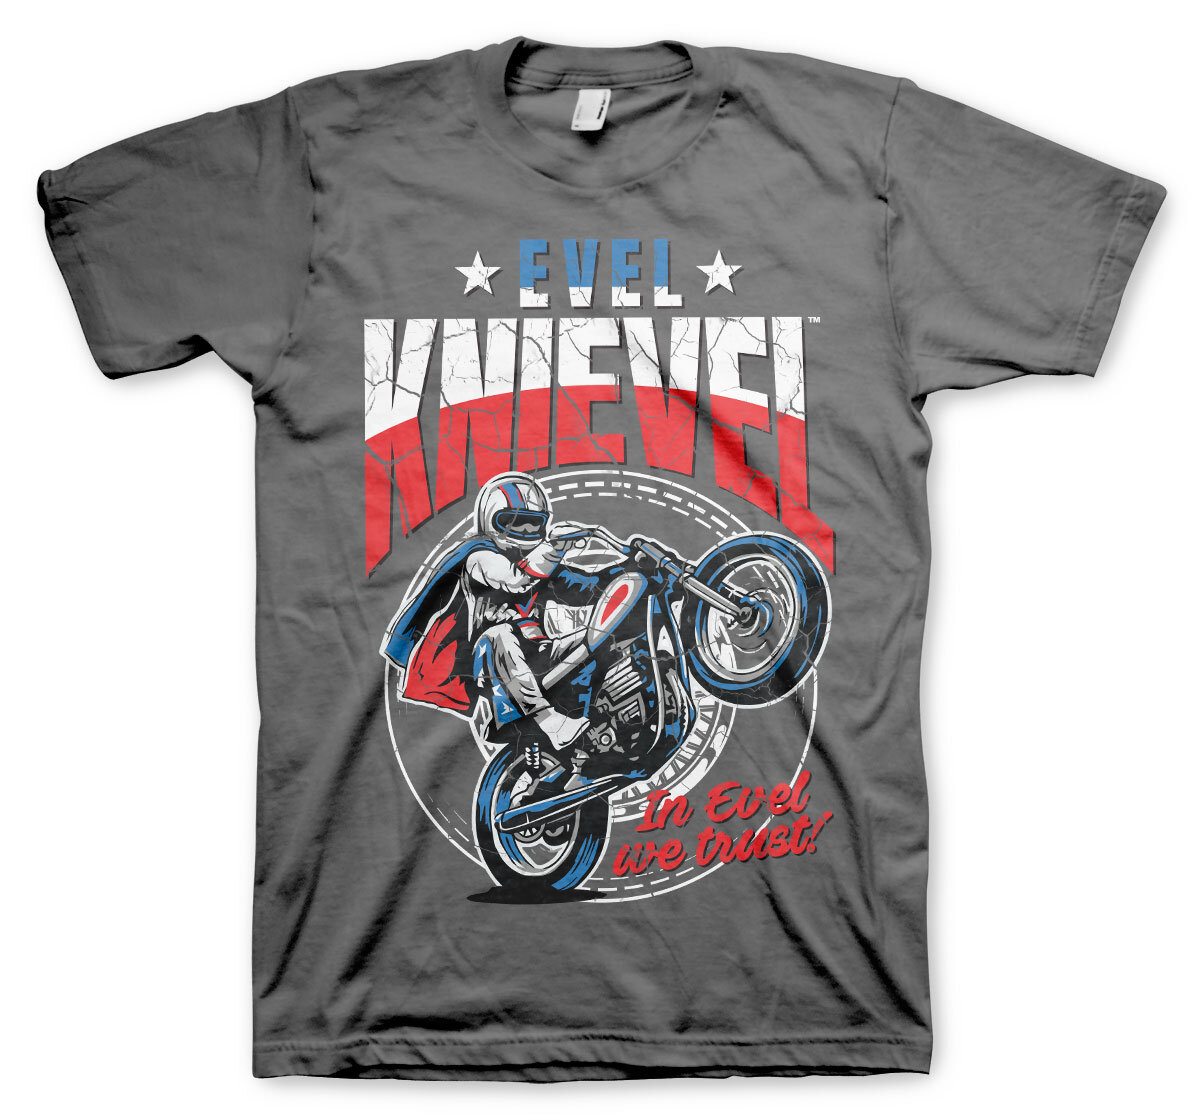 Evel Knievel Wheelie T-Shirt